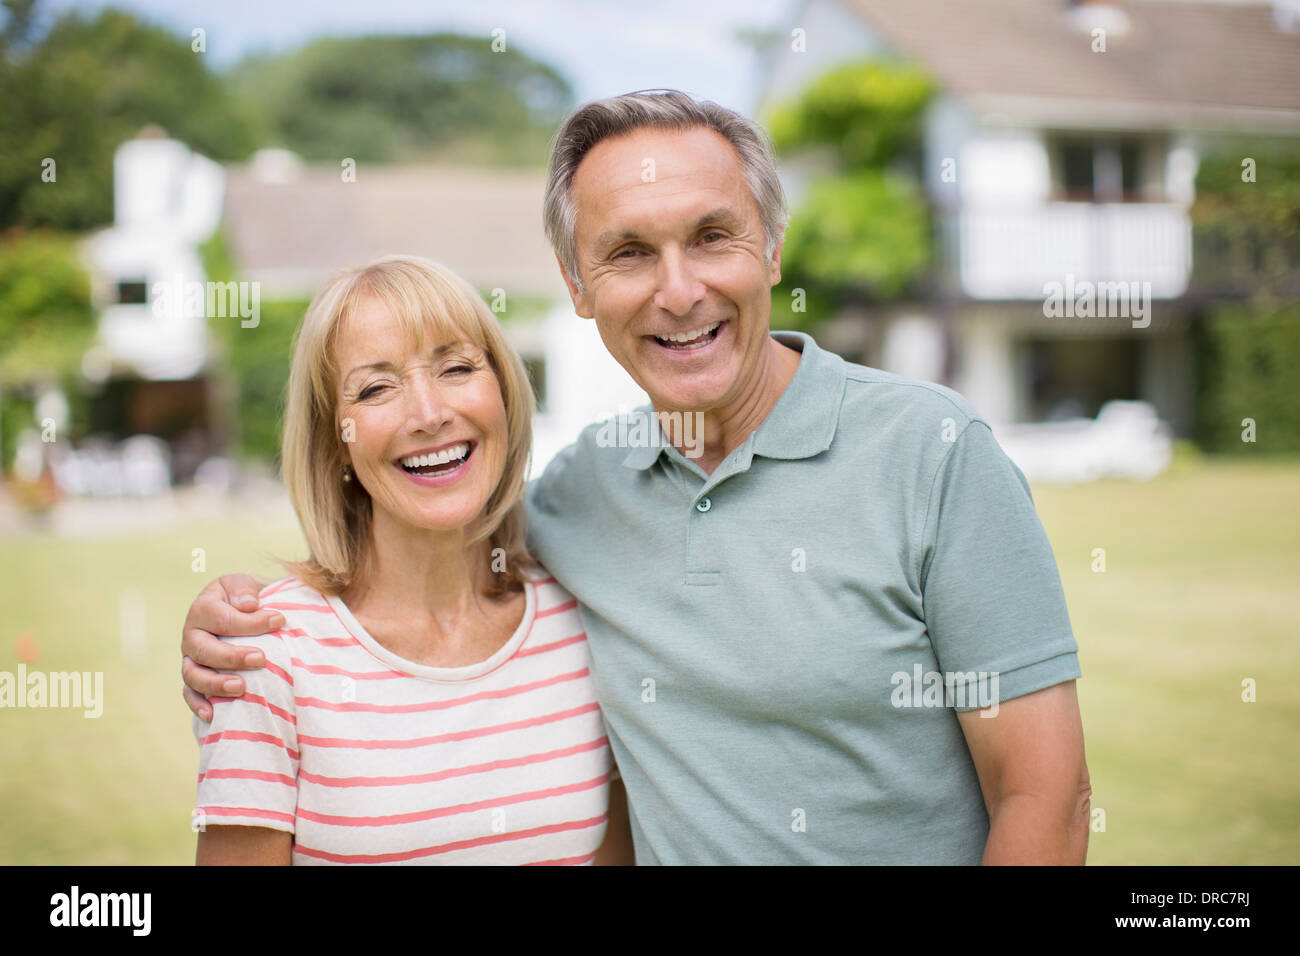 Smiling senior couple hugging outdoors Stock Photo